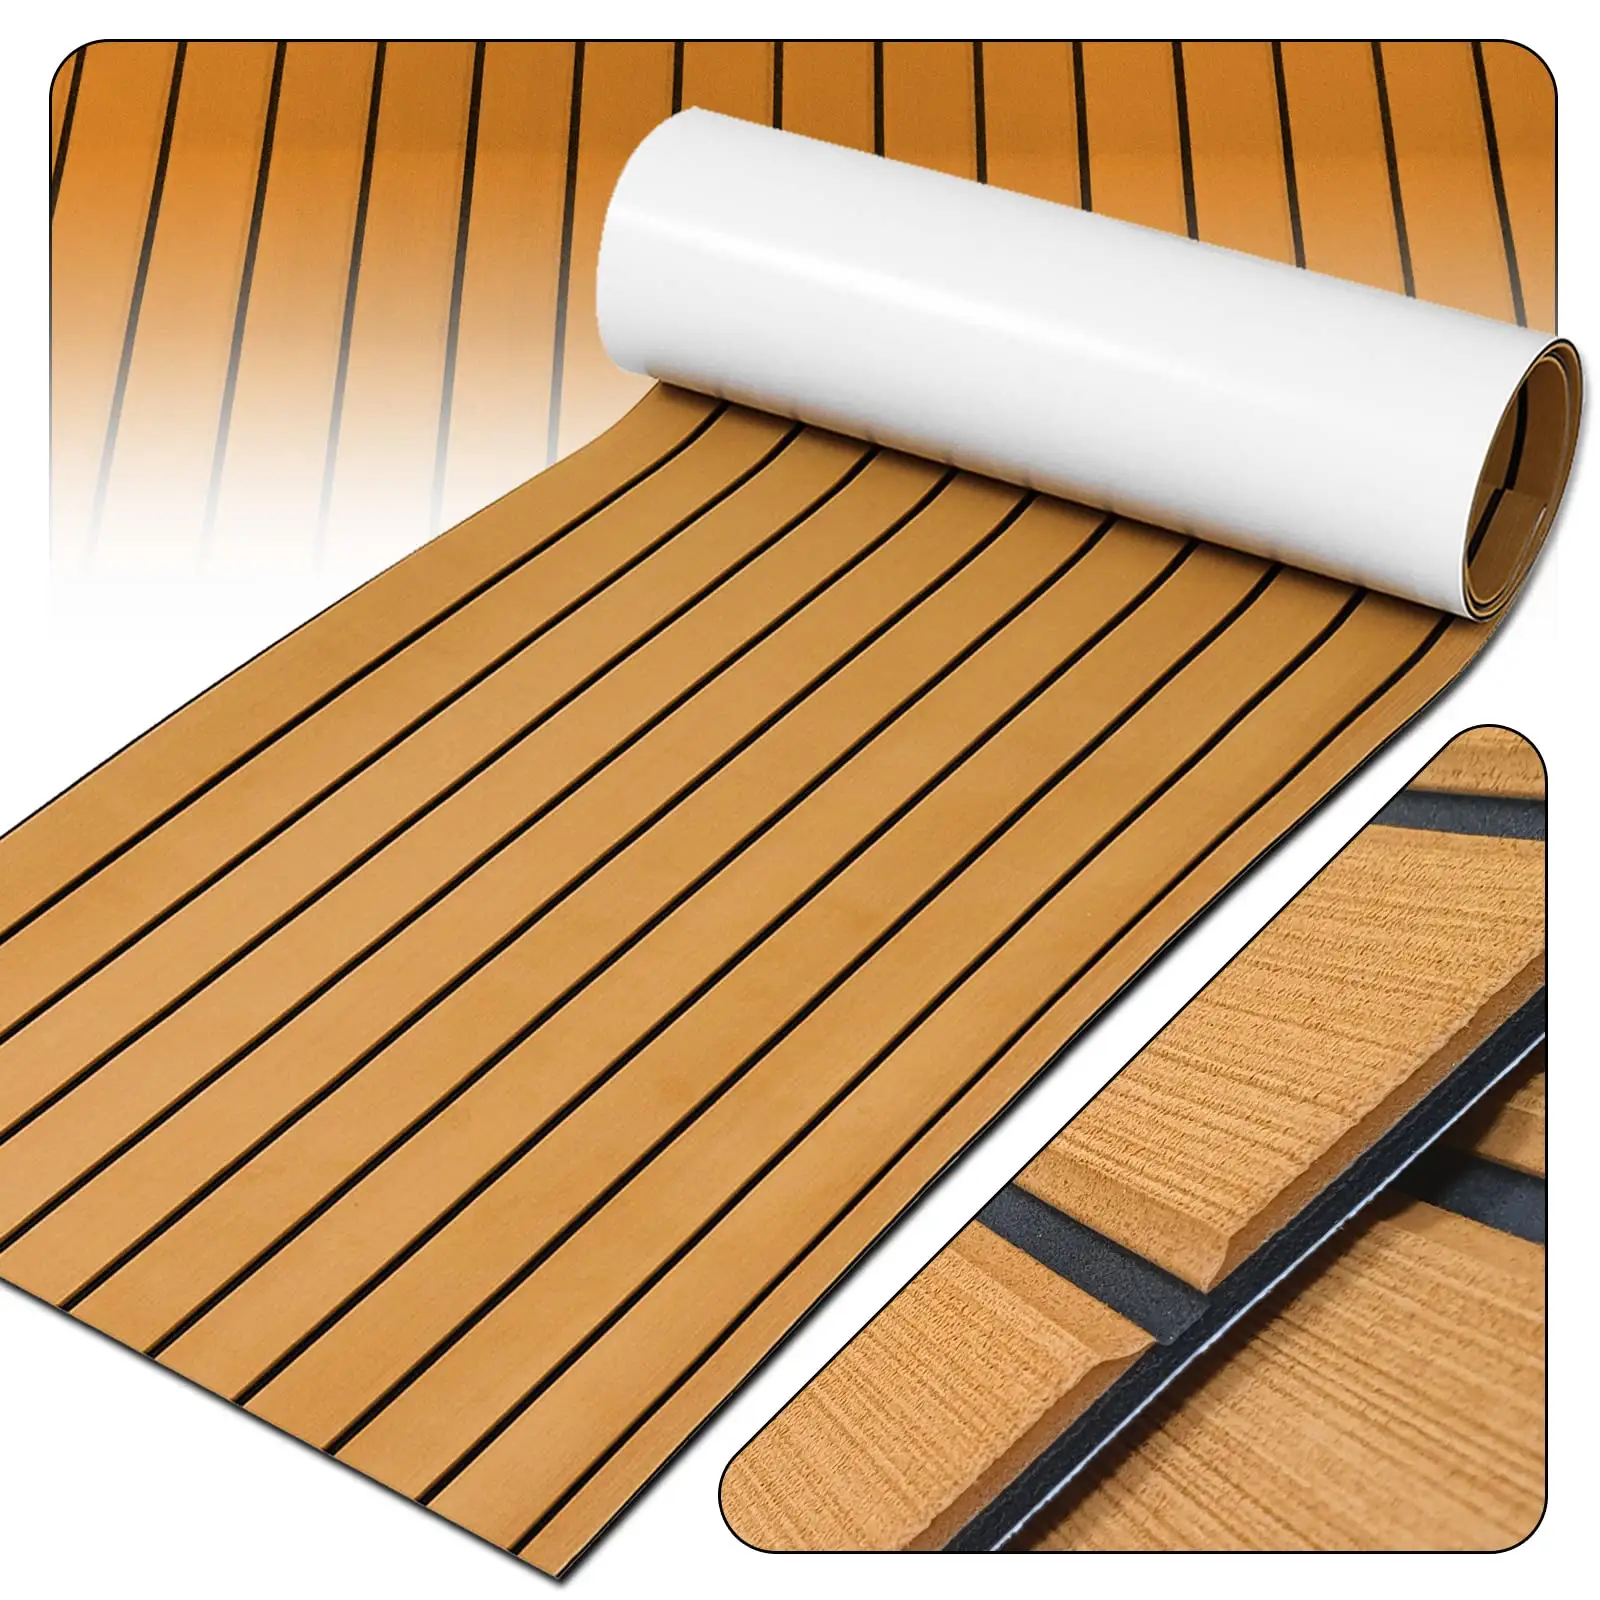 Nuovo Design Yacht EVA schiuma barca pavimento in finto Teak rivestimento antiscivolo tappetino marino